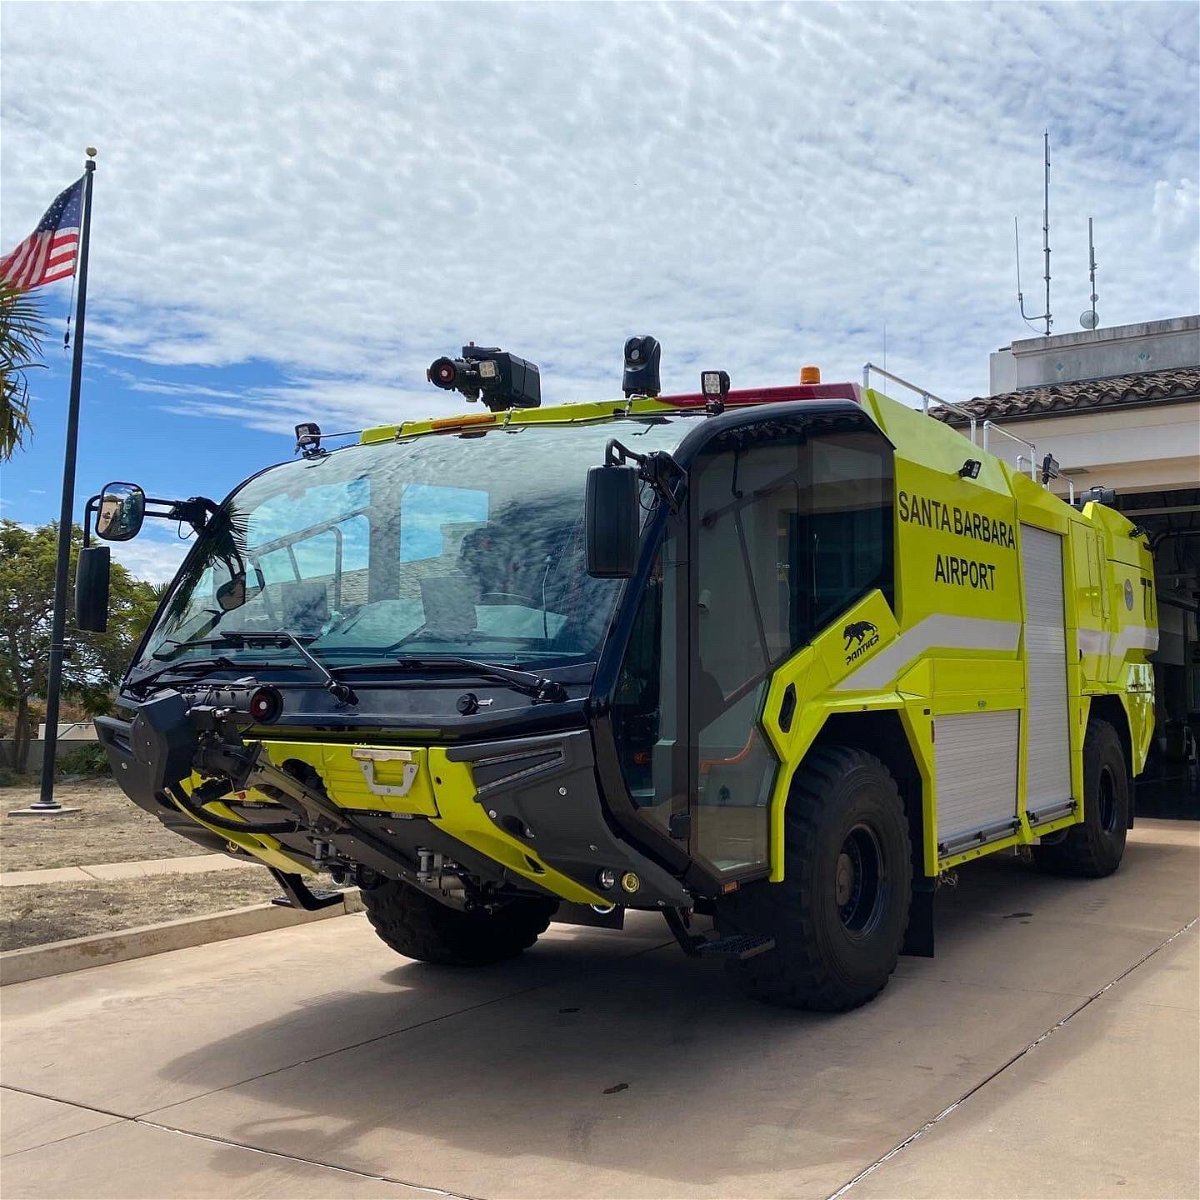 Santa Barbara Airport obtains new firefighting truck News Channel 312